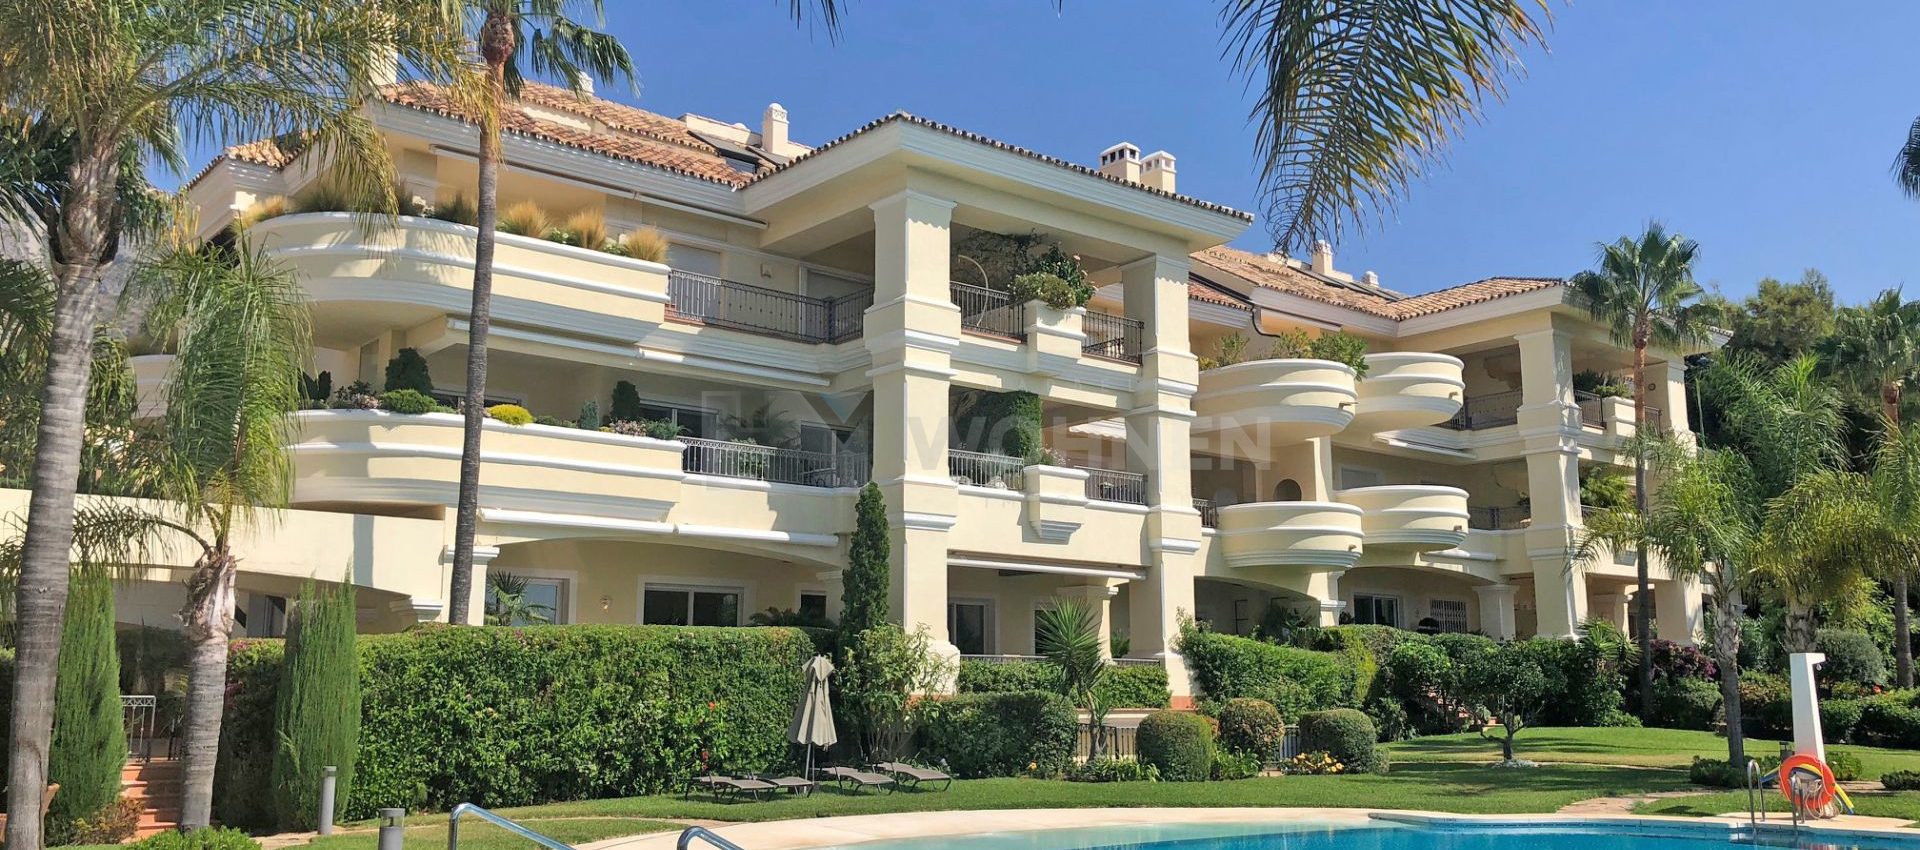 Luxury apartment for sale in Alto Reales Marbella